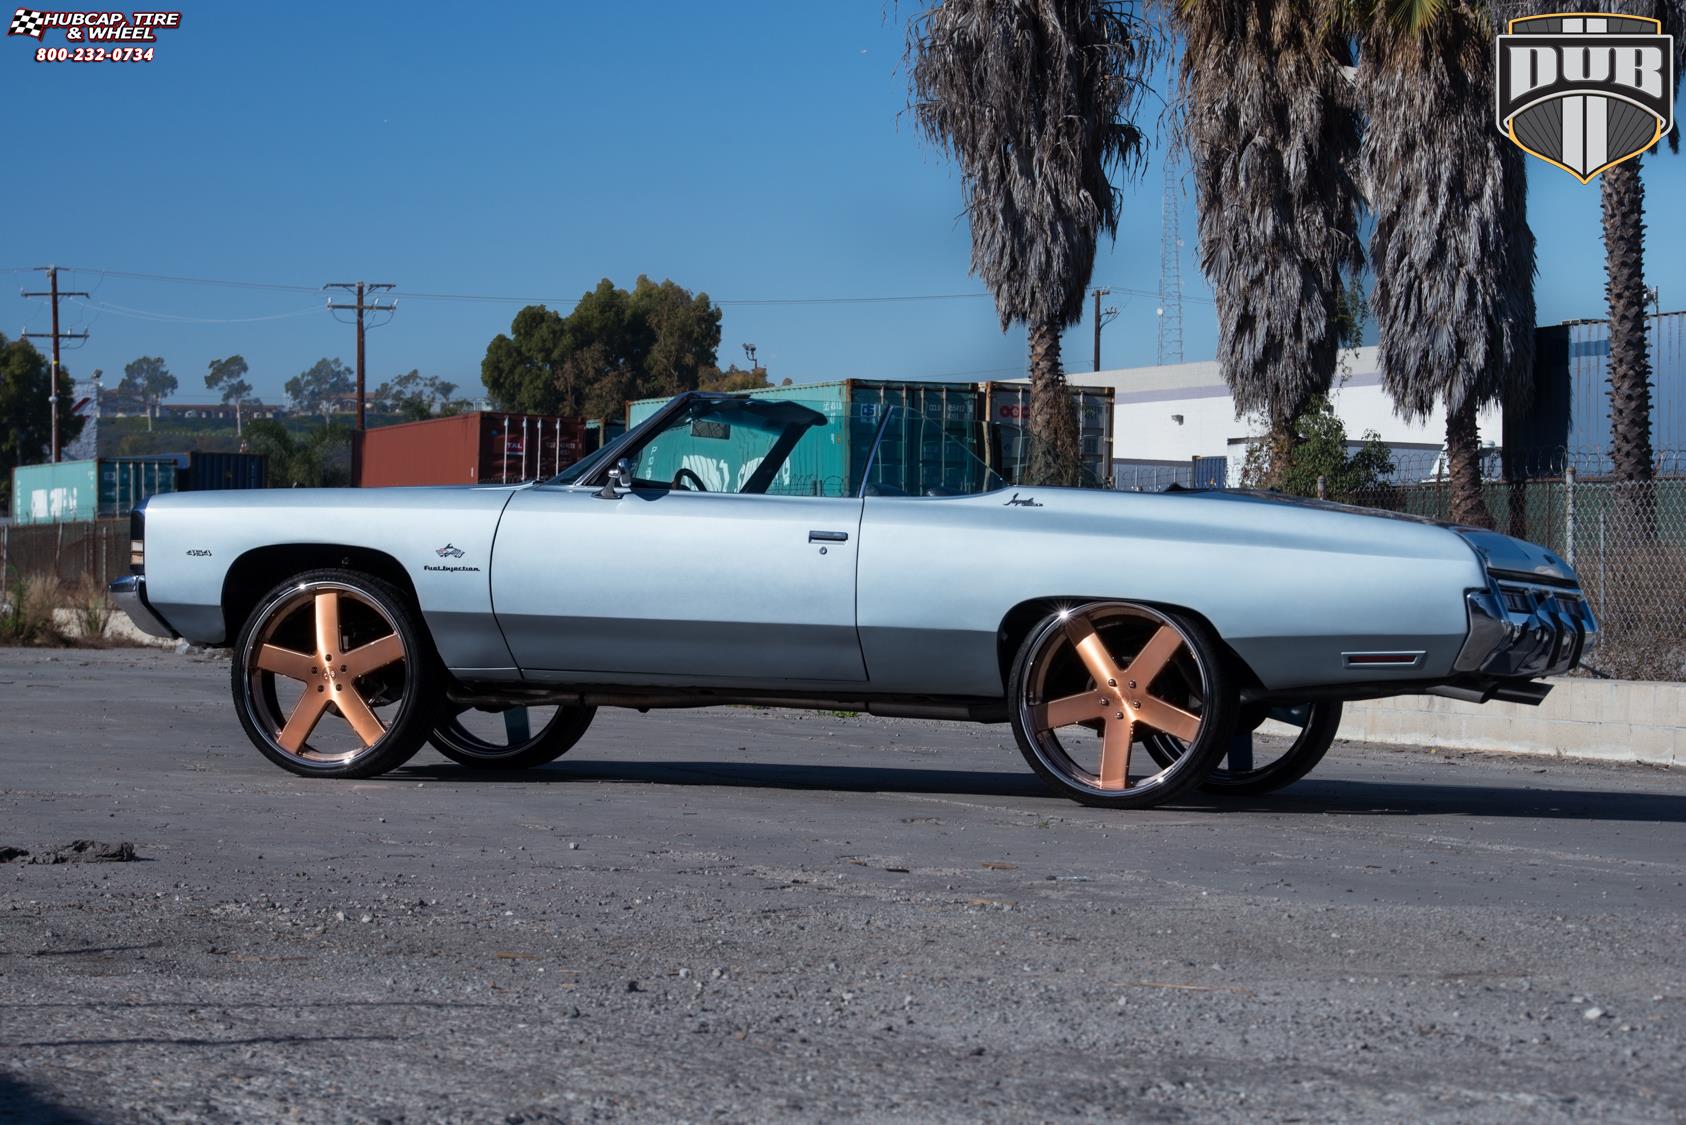 vehicle gallery/chevrolet impala dub x84 baller 26X9  Brushed w/ rose gold tint, chrome lip wheels and rims